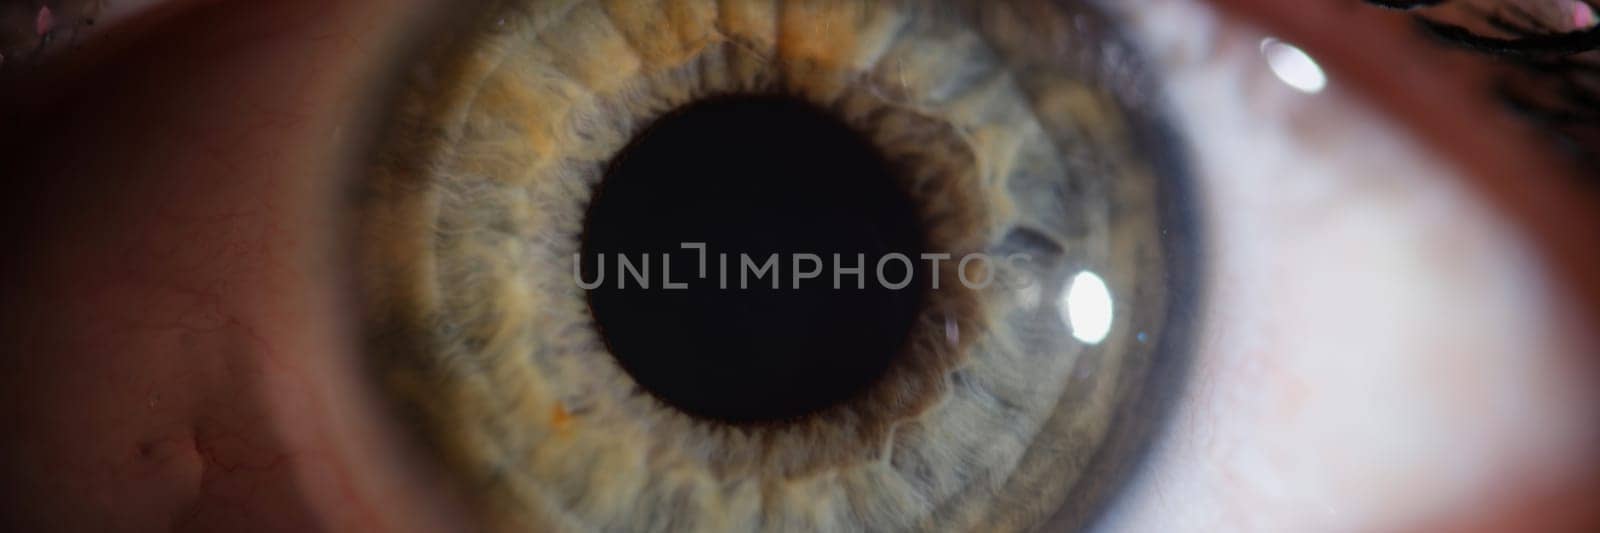 Macro photo of green female beautiful eye closeup. Laser vision correction concept